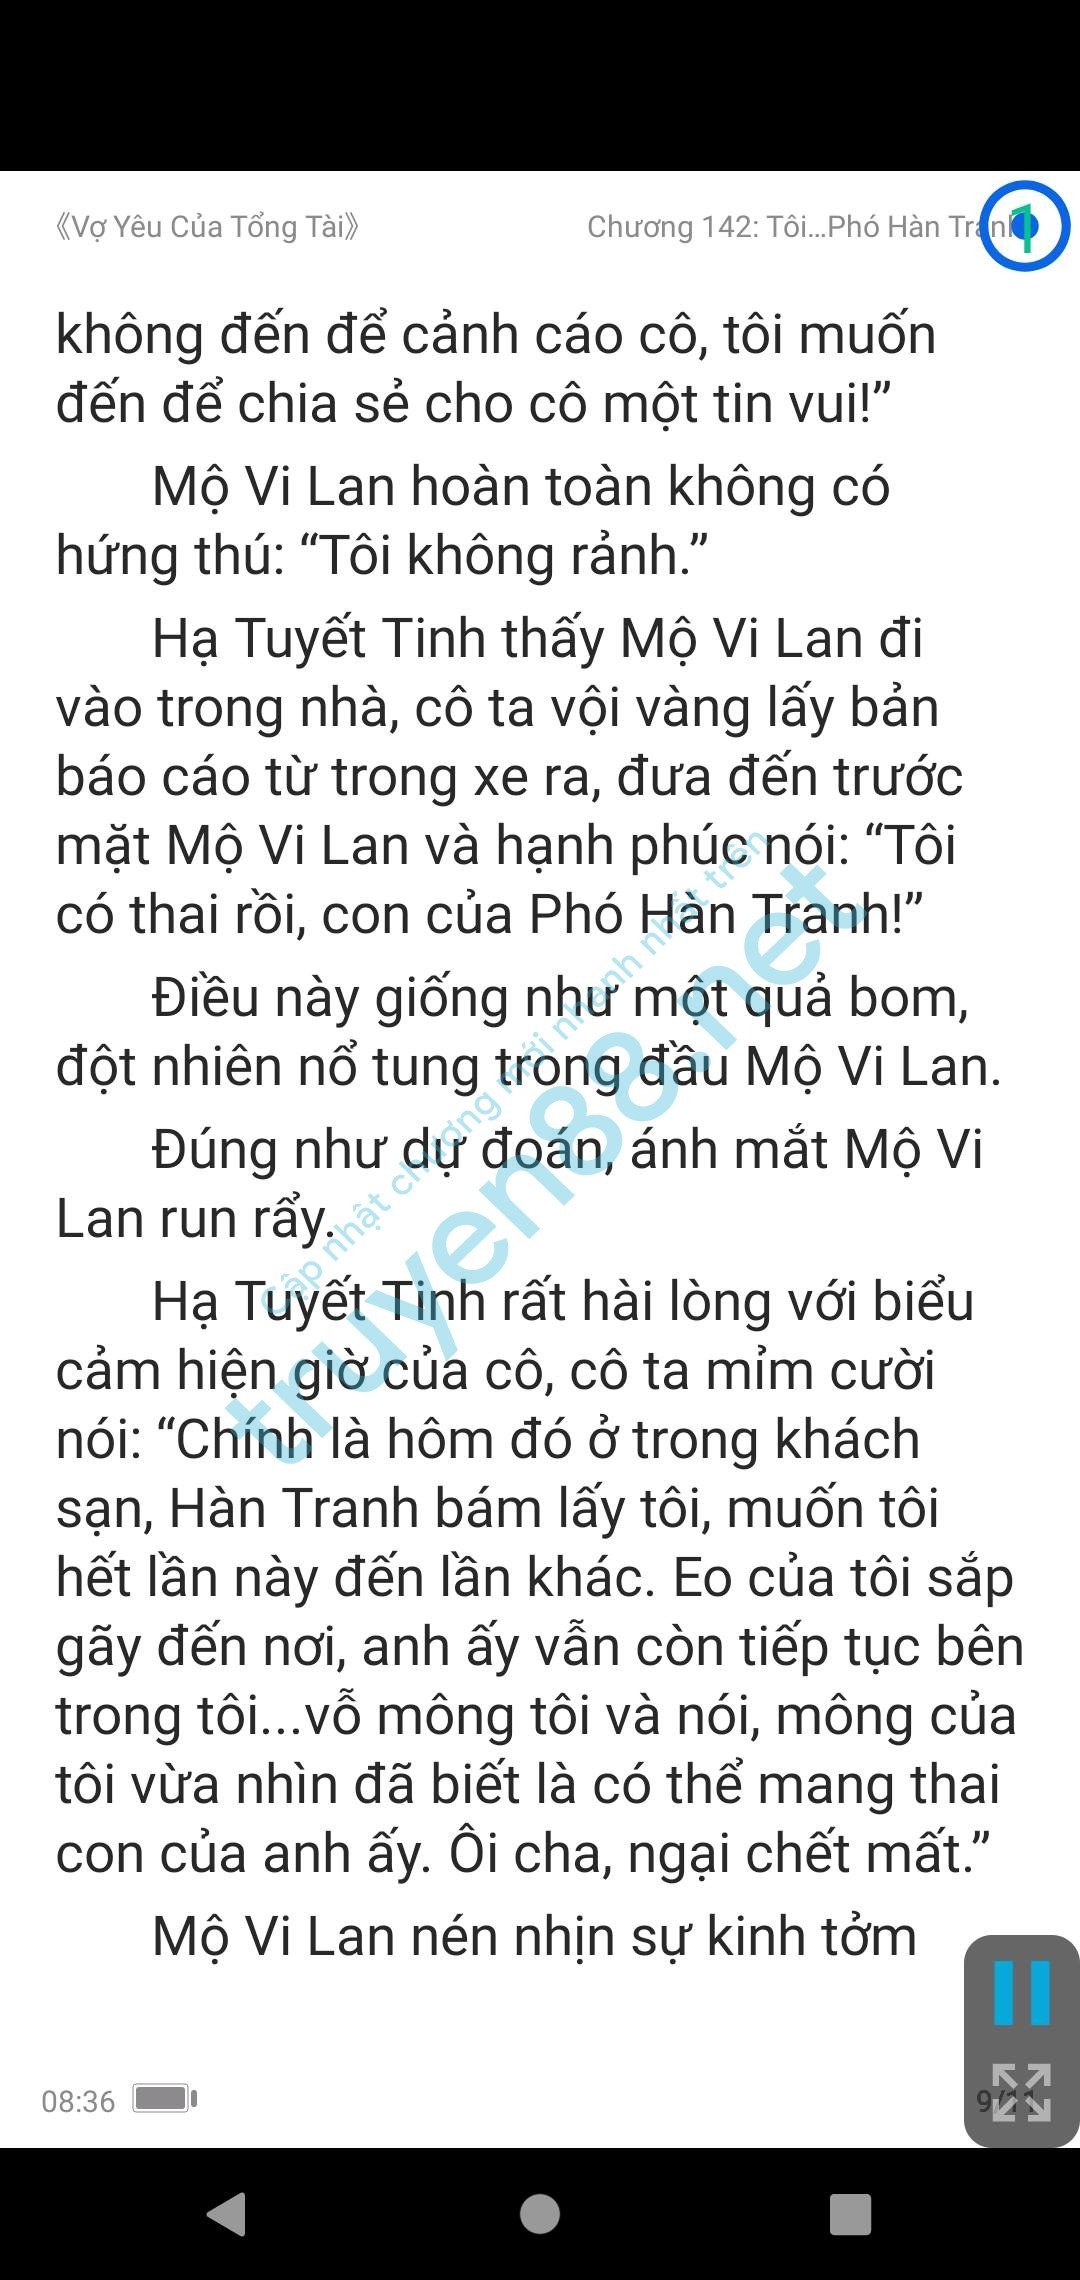 vo-yeu-cua-tong-tai-mo-vi-lan--pho-han-tranh-142-1